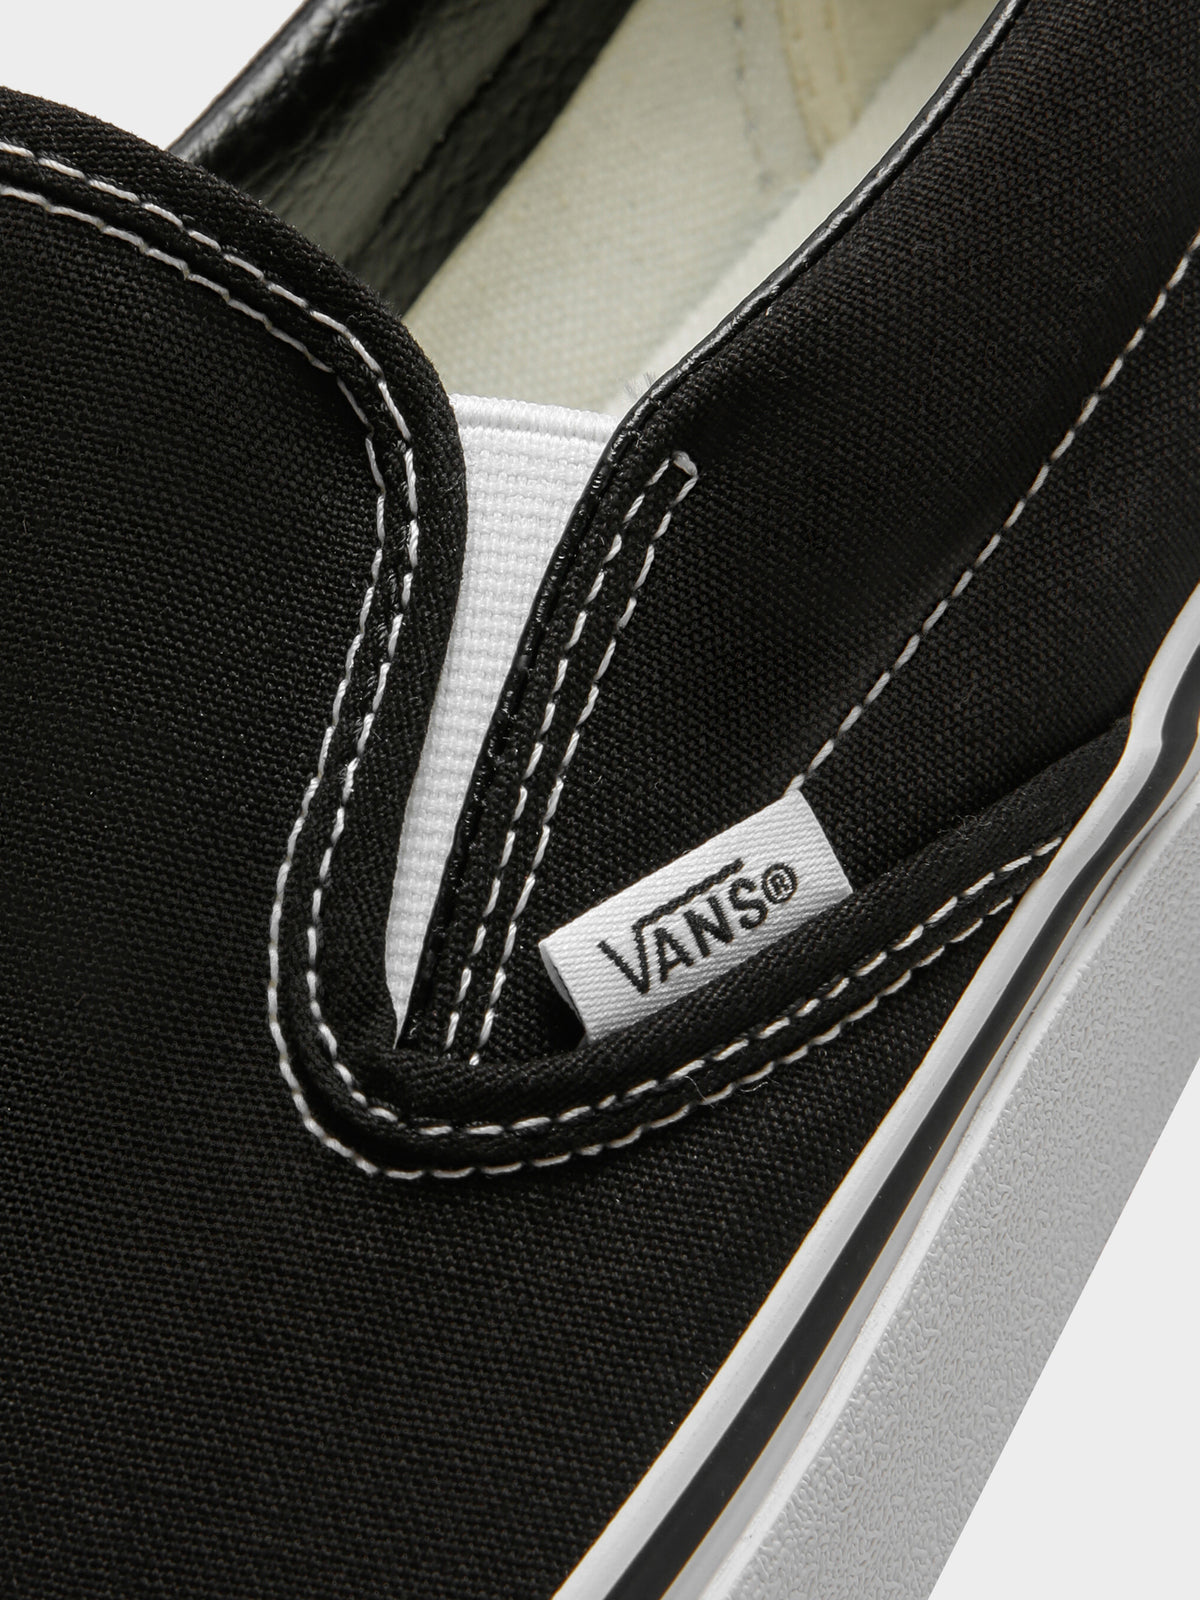 Unisex Classic Slip-On Sneakers in Black &amp; White